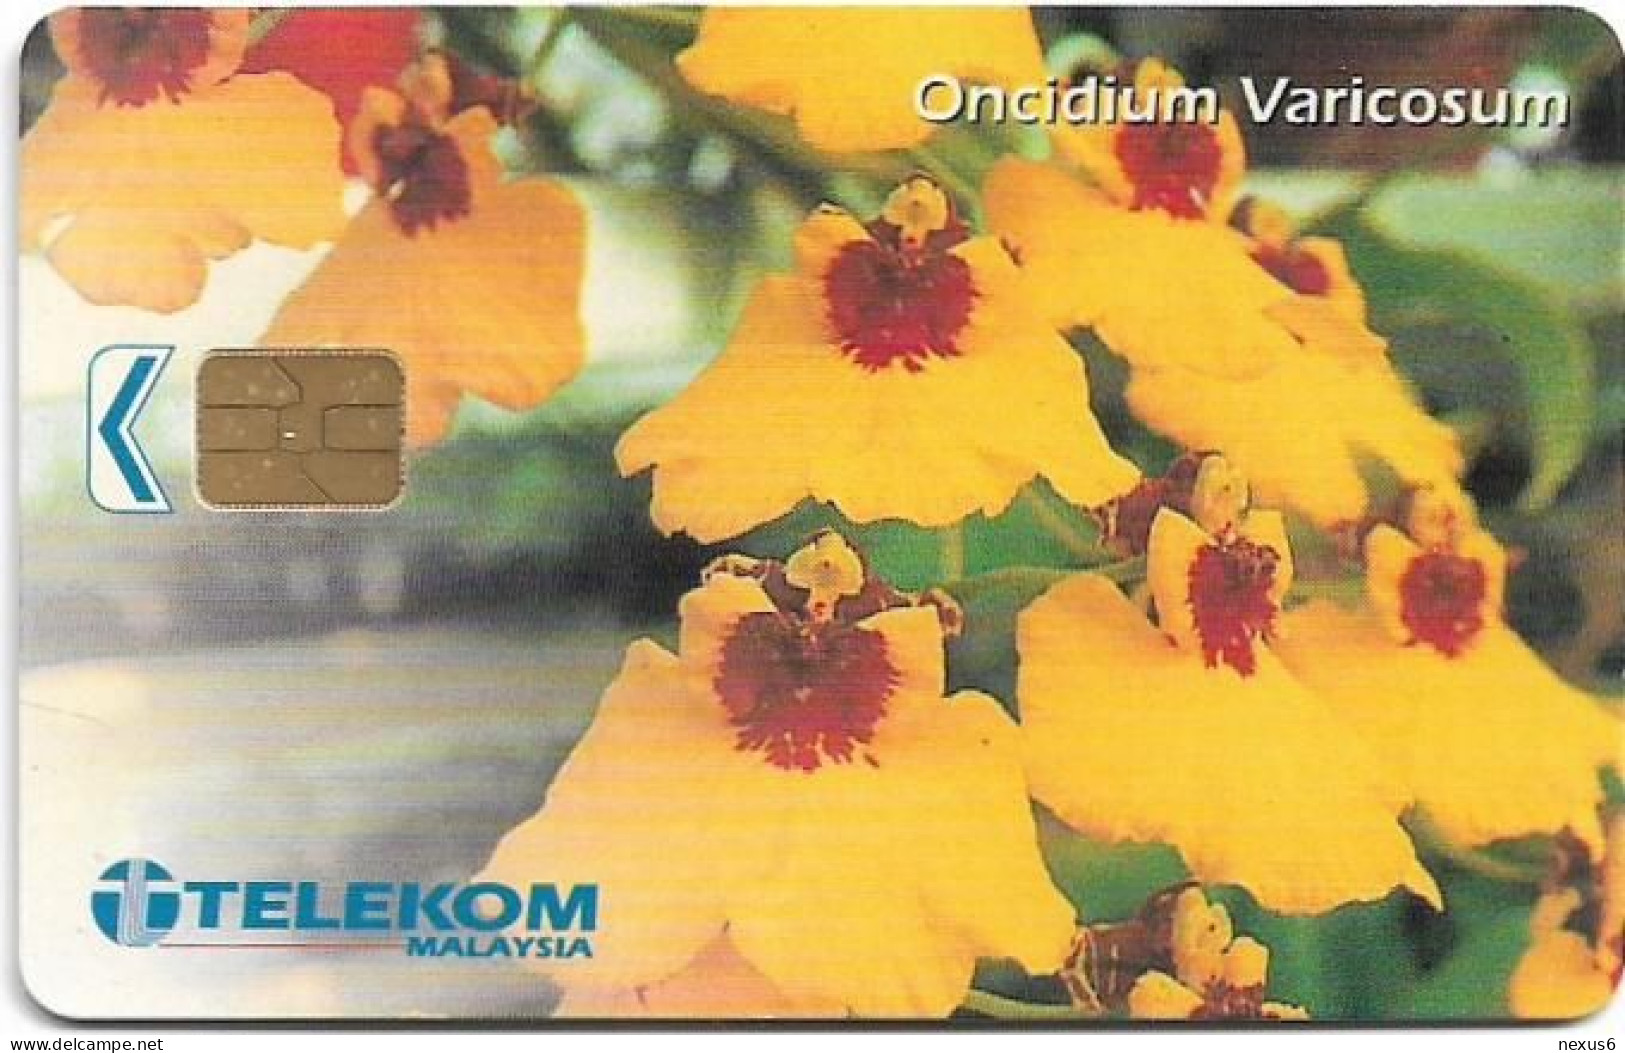 Malaysia - Telekom Malaysia (chip) - Oncidium Varicosum Flower, Chip Siemens S5, 50RM, Used - Malasia